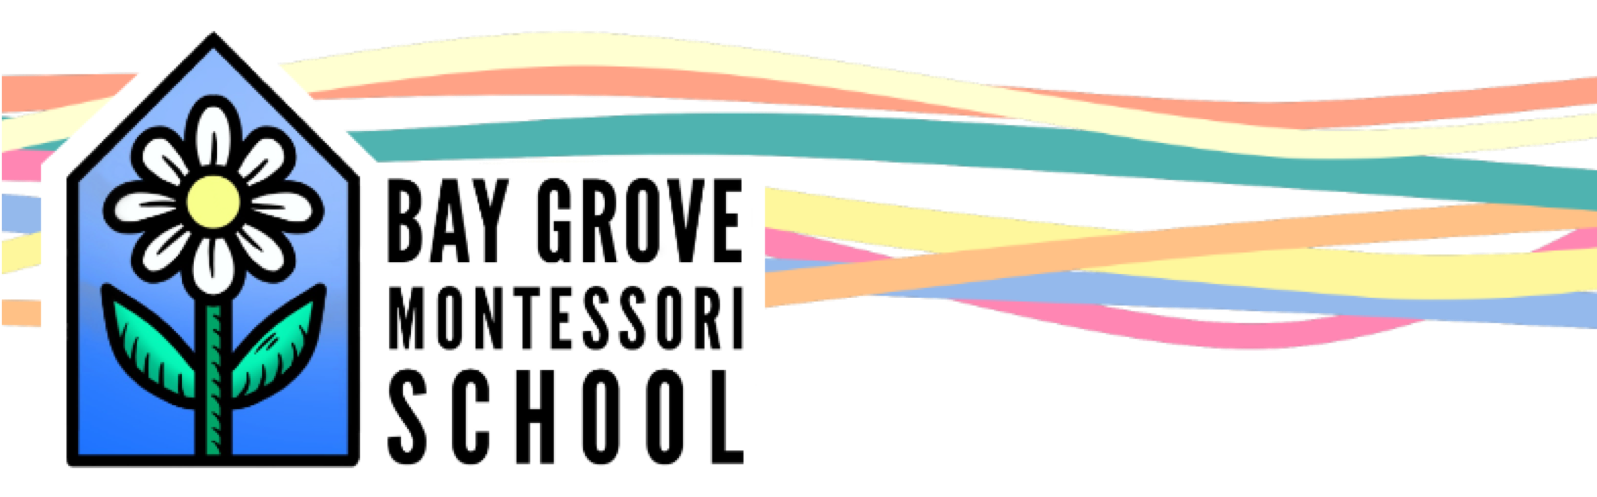 Sweetbay Montessori School is becoming Bay Grove Montessori School for 2023-24